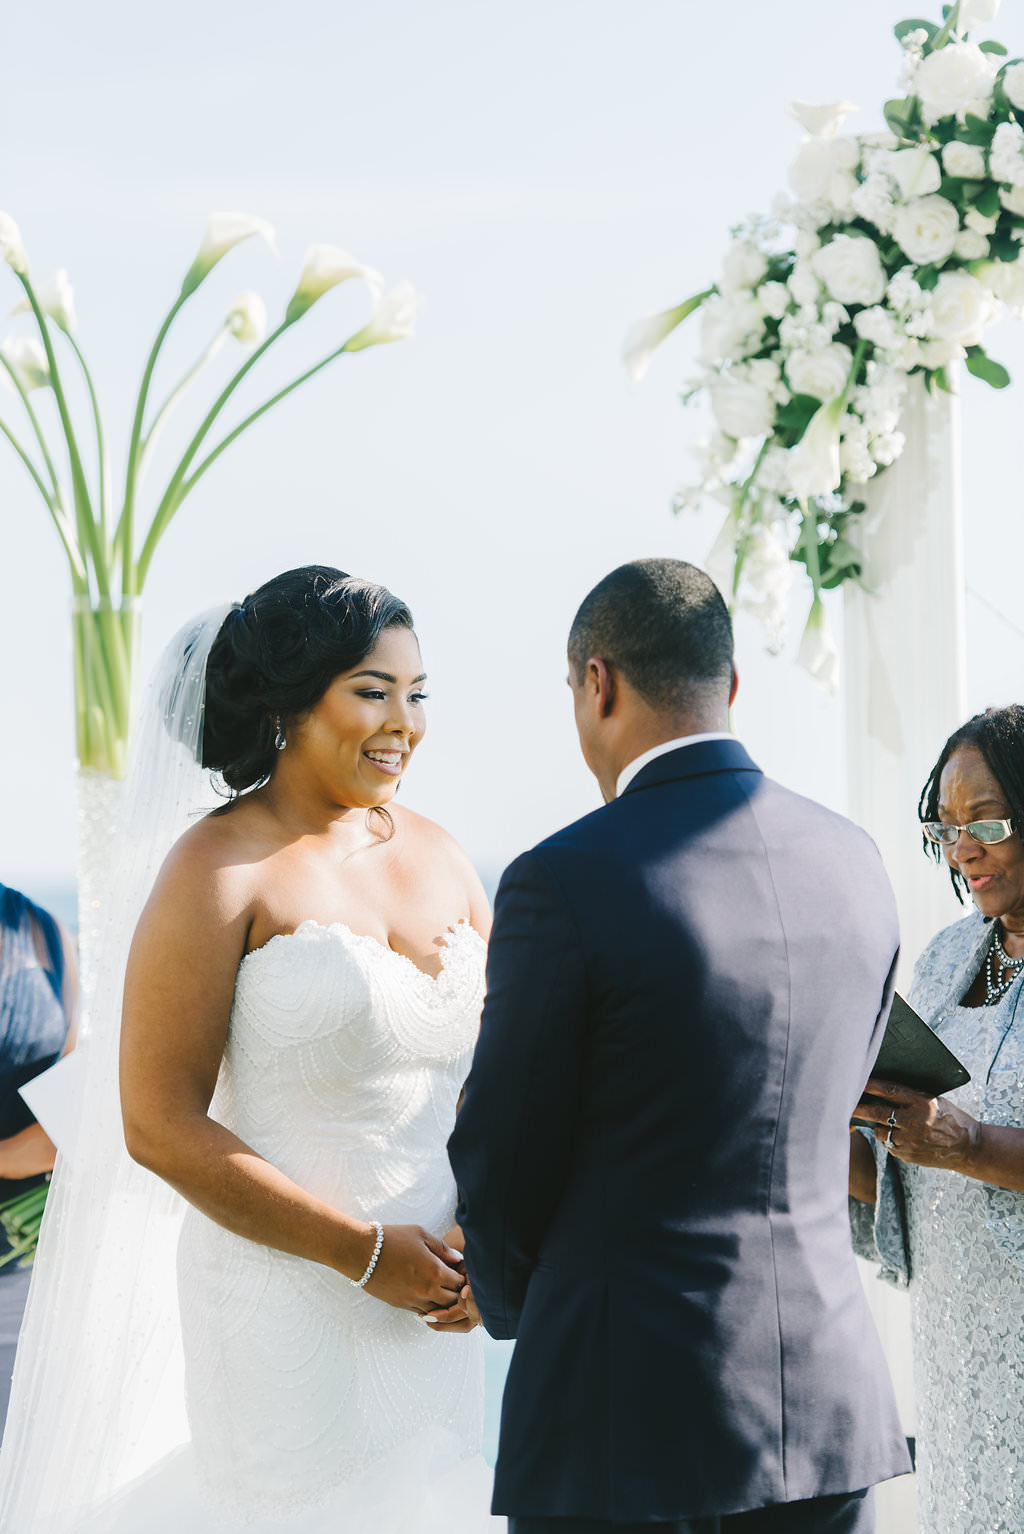 Florida Bride and Groom Wedding Ceremony Portrait | Tampa Bay Wedding Photographer Kera Photography